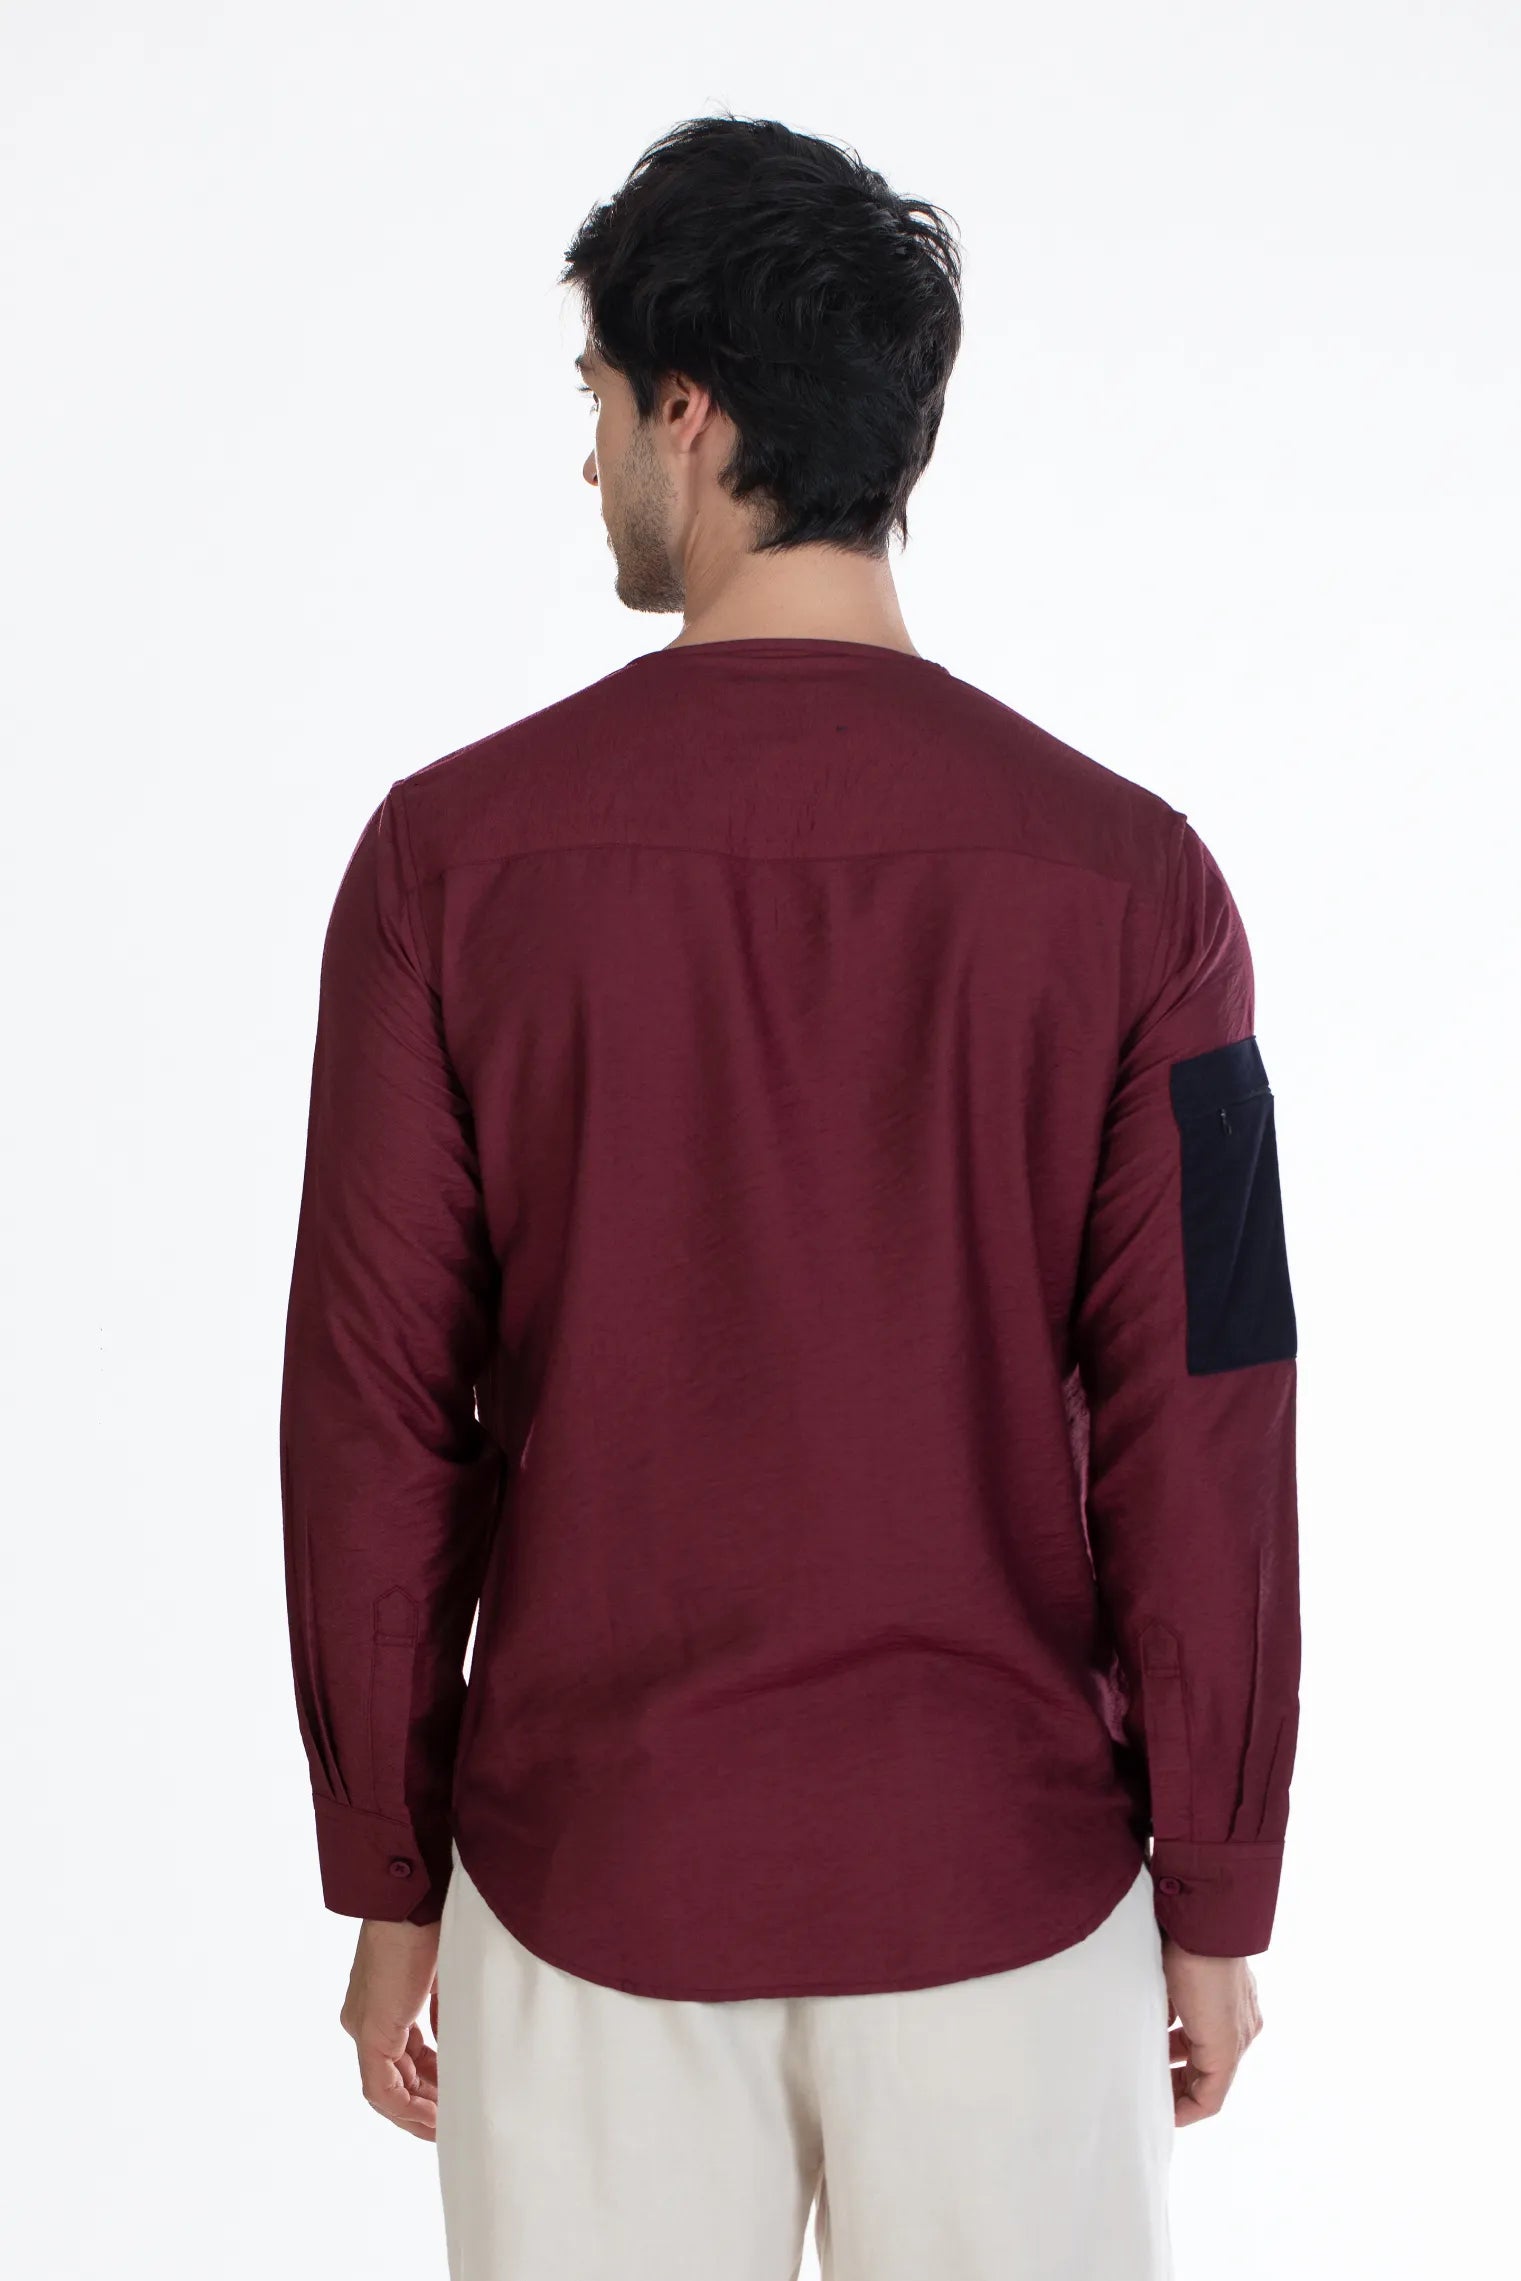 Buy Sleeve Pocket Crushed Shirt Online.